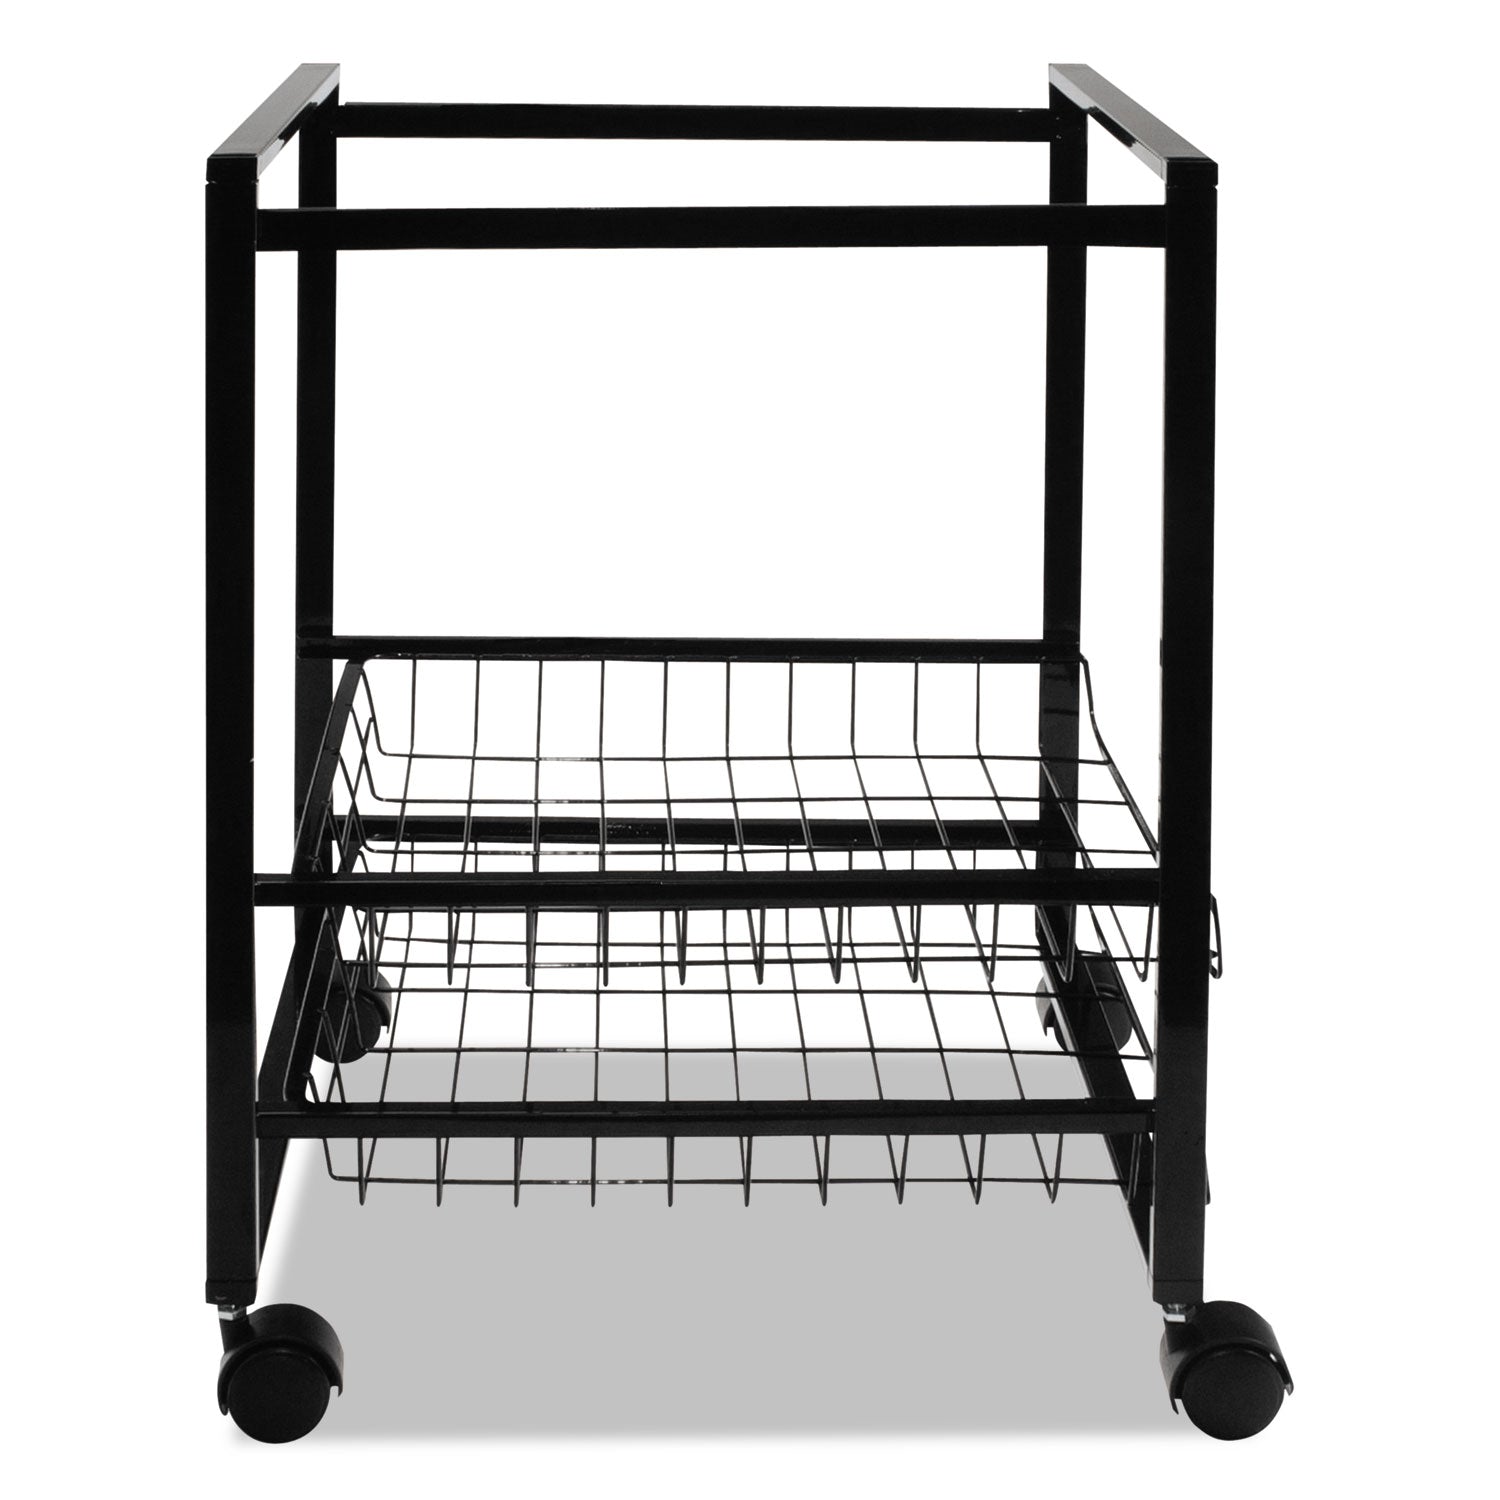 Mobile File Cart with Sliding Baskets, Metal, 2 Drawers, 1 Bin, 12.88" x 15" x 21.13", Black - 